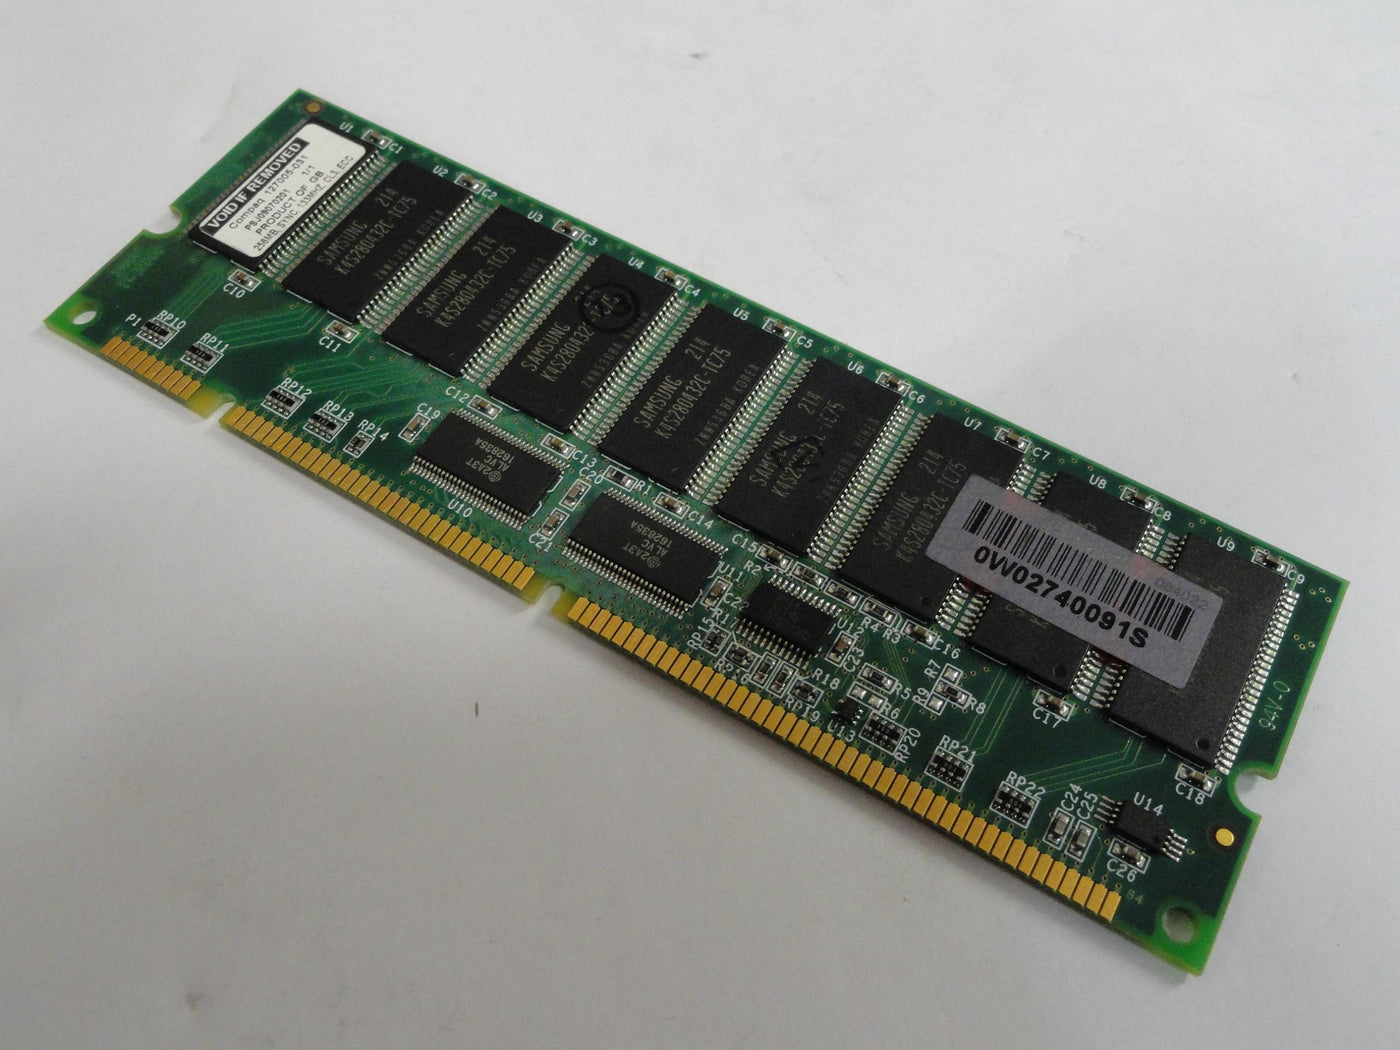 PR01024_127005-031_Compaq 256Mb PC133 ECC CL3 SDRAM DIMM - Image2